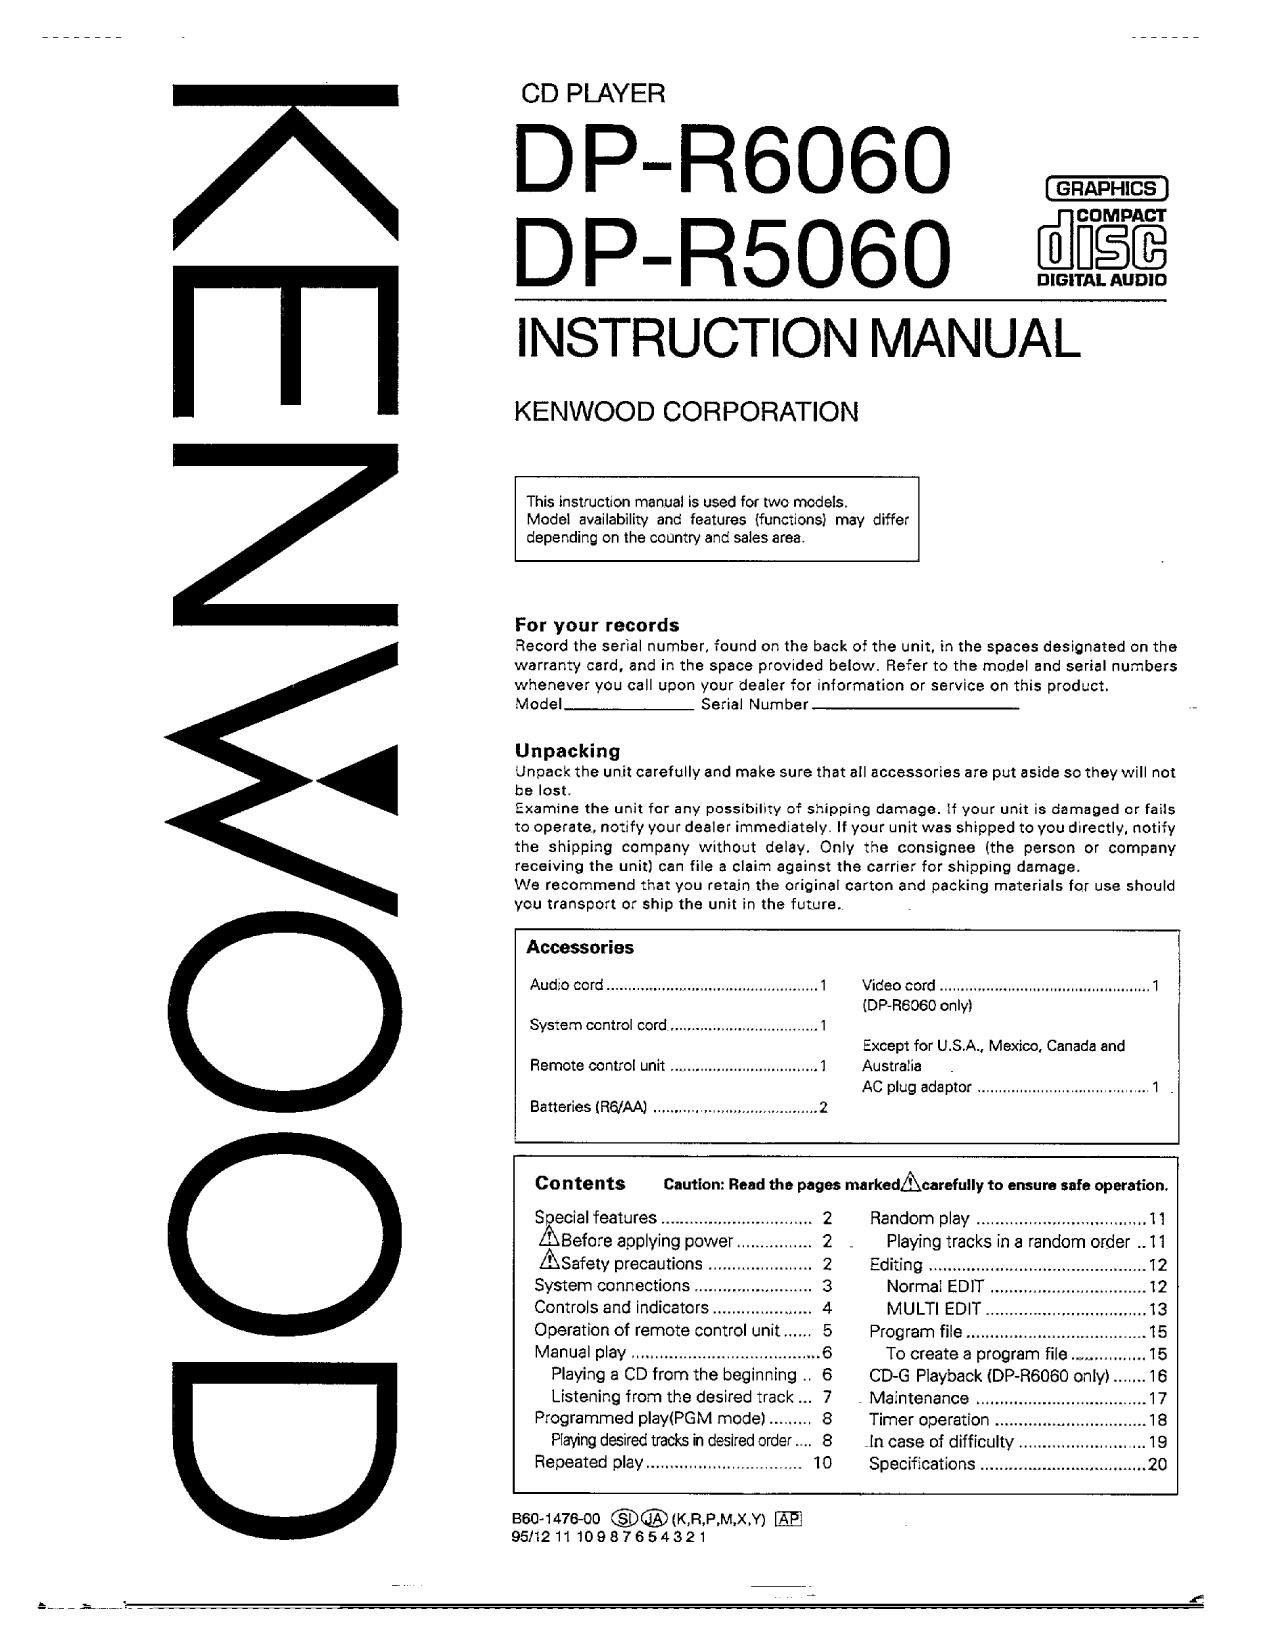 Kenwood DPR 5060 Owners Manual